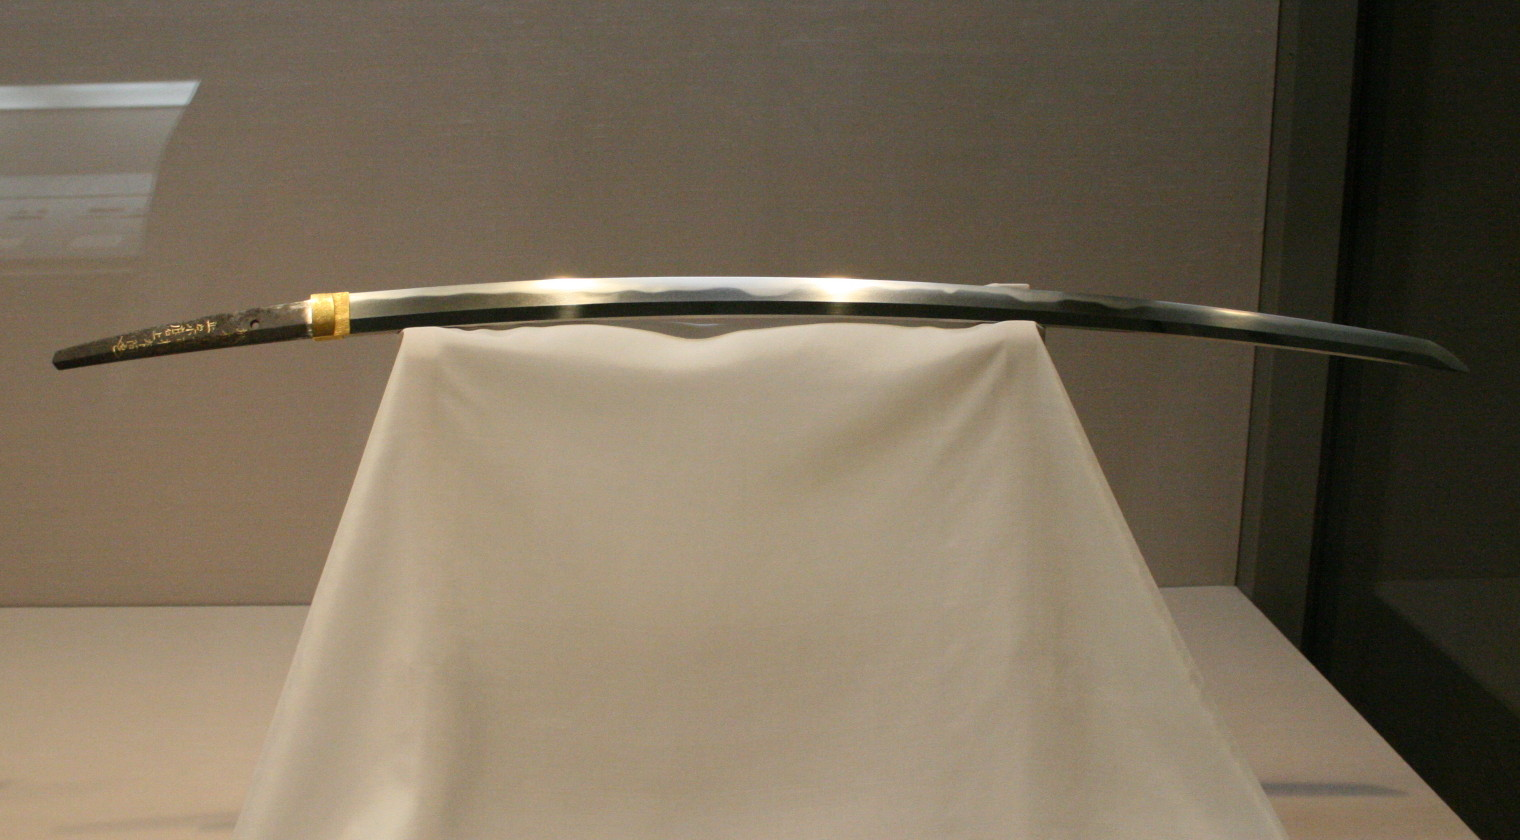 The Story of the Cursed Samurai Muramasa Blades - Sword Scholar